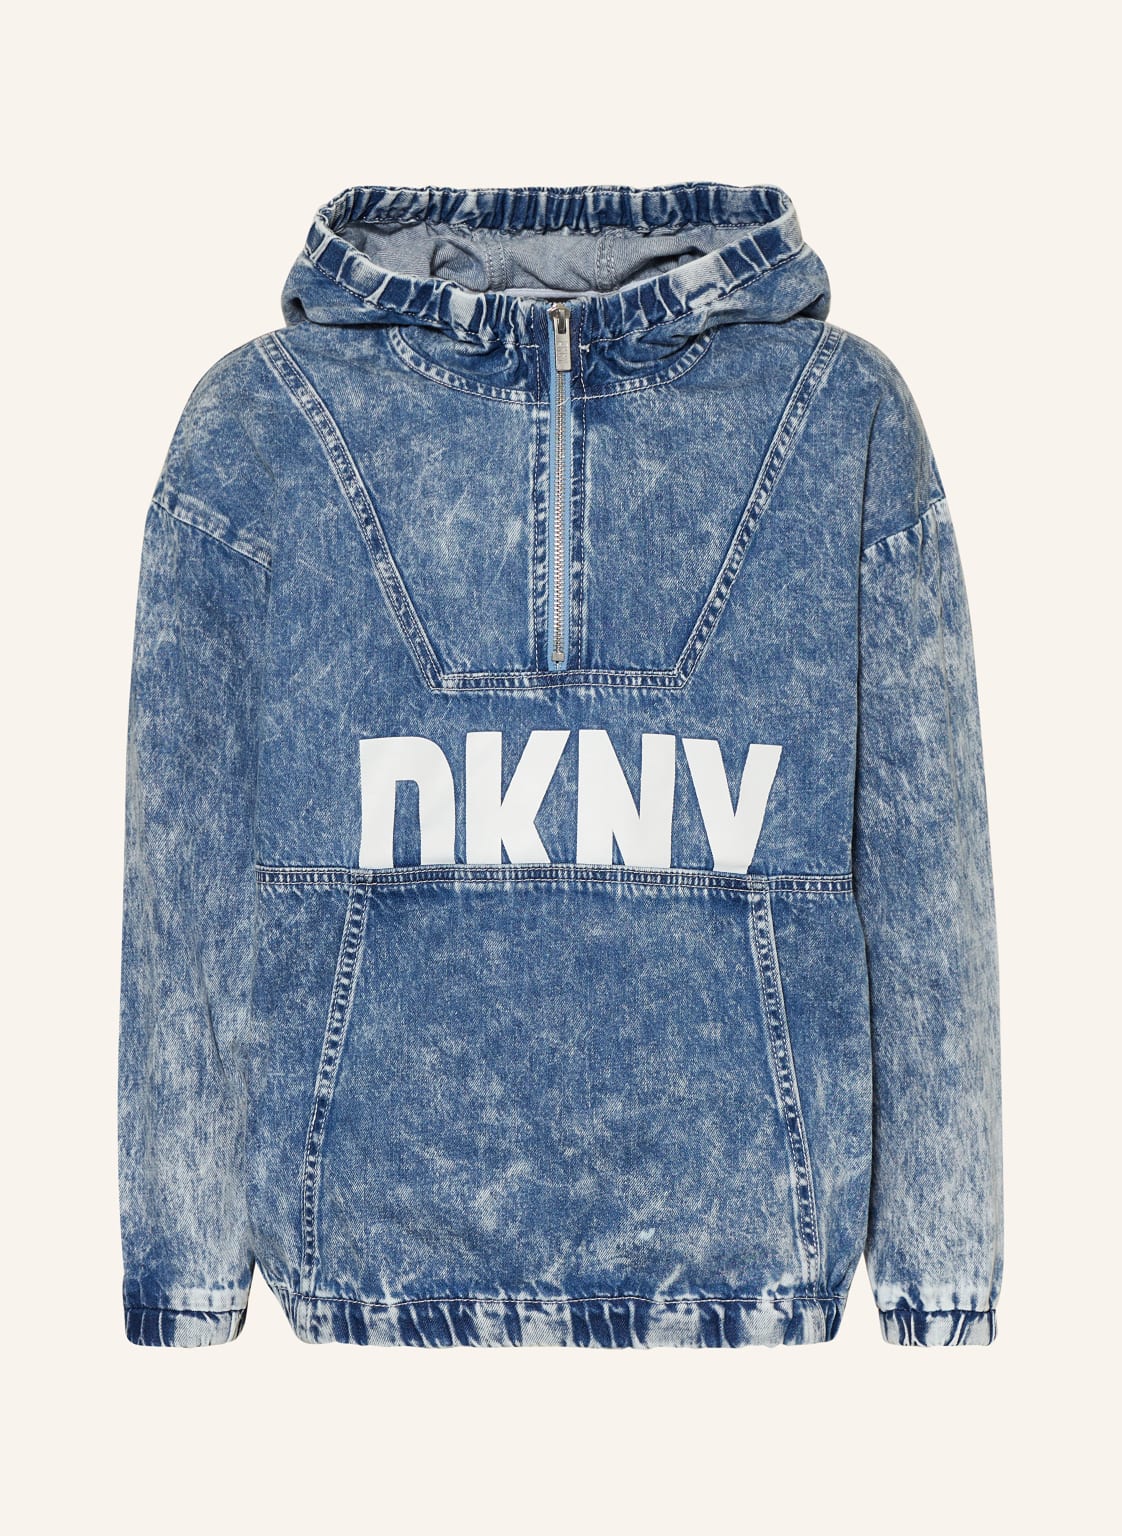 Dkny Overjacket In Jeansoptik blau von DKNY